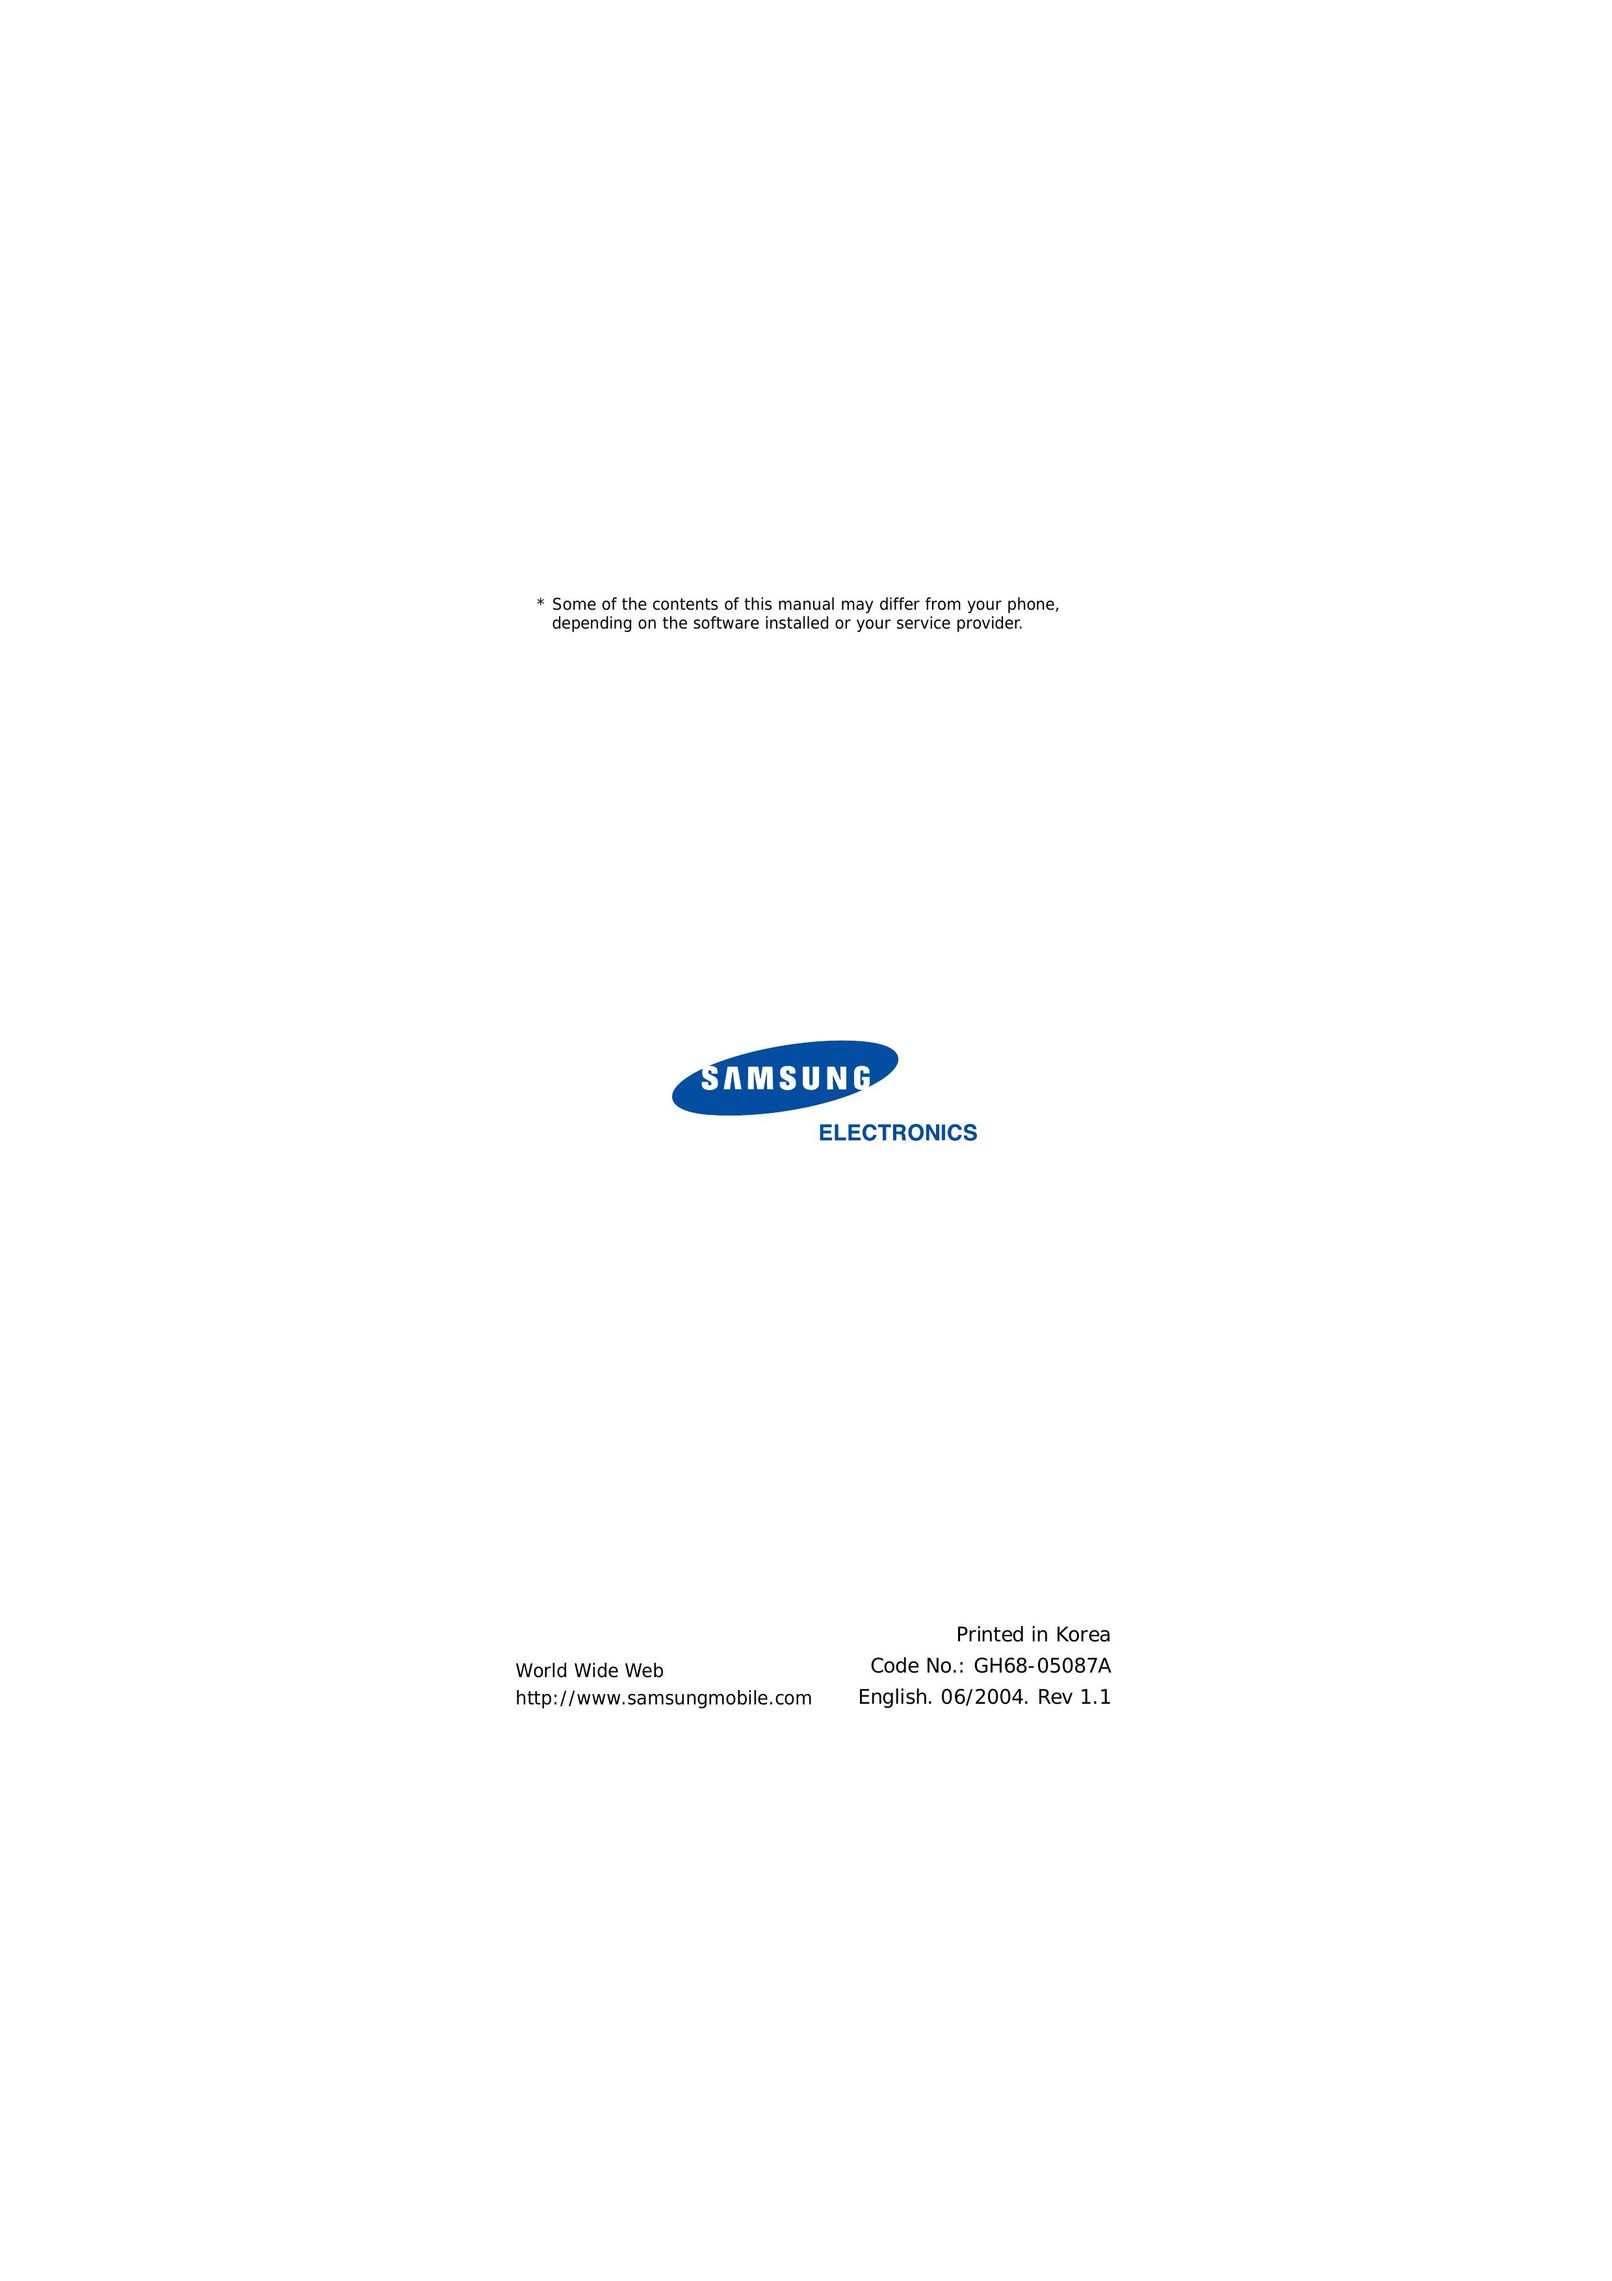 Samsung GSM900 Cordless Telephone User Manual